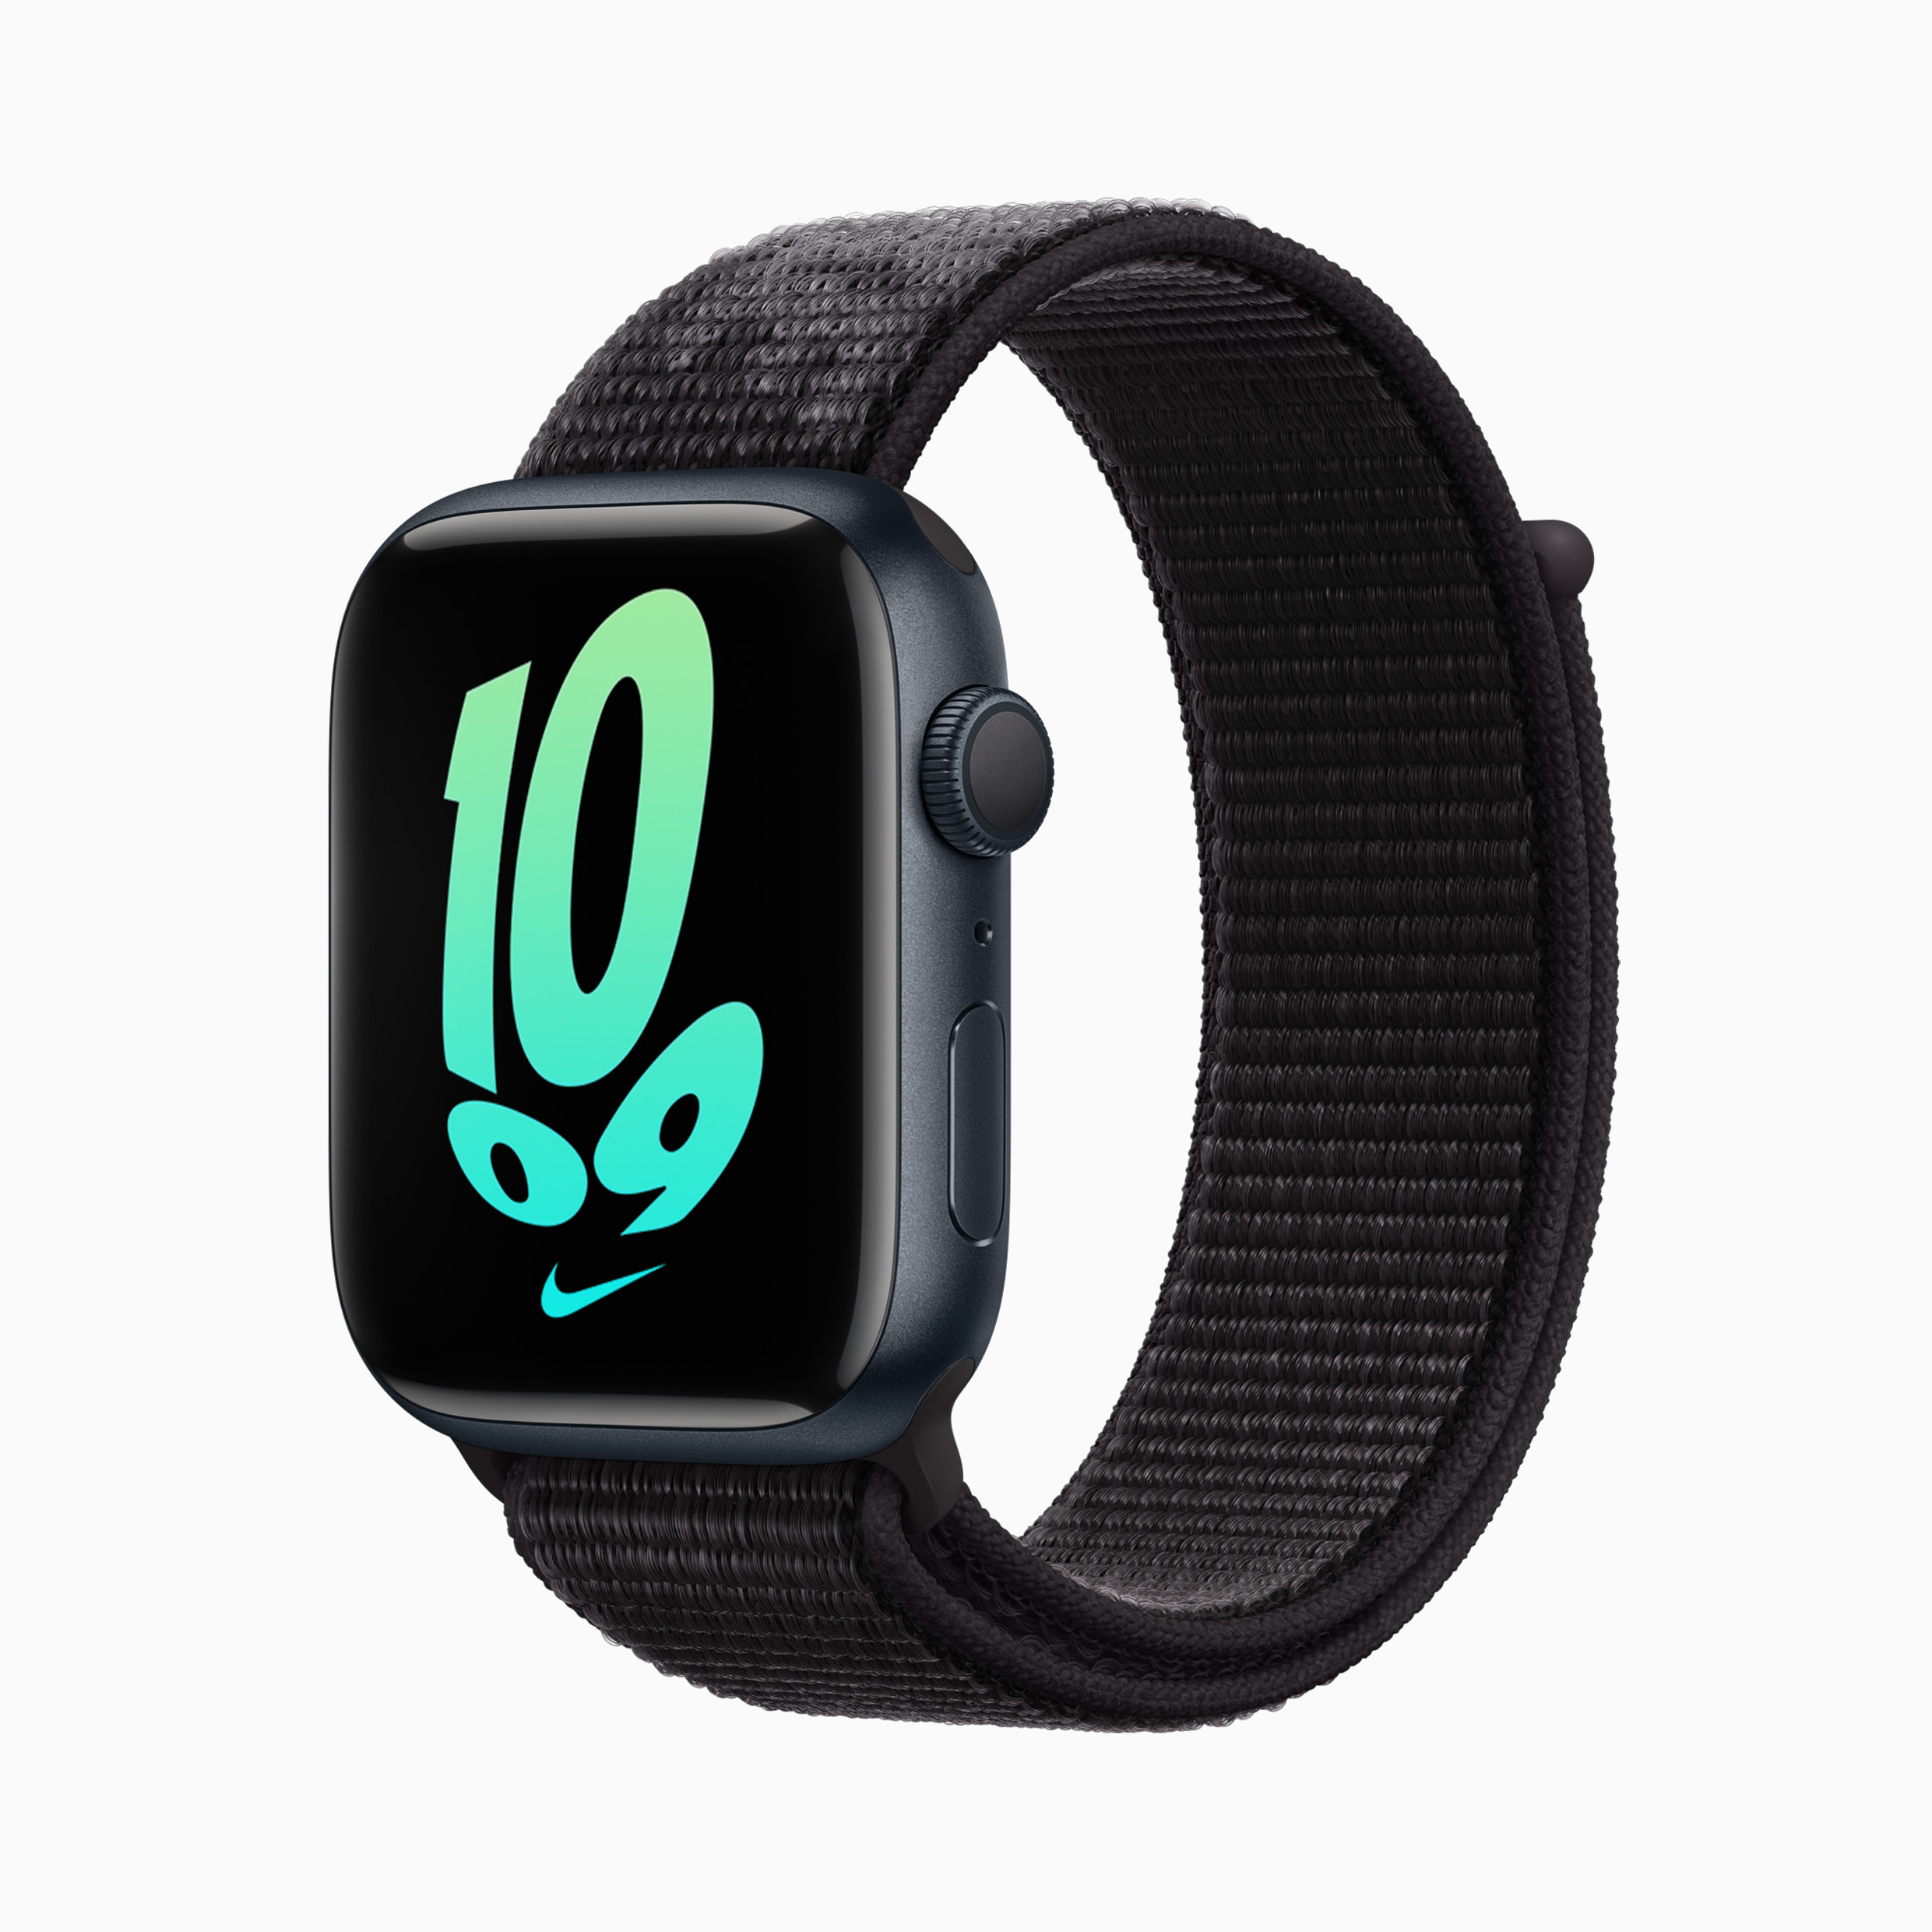 Apple watch series7 availability nike 10052021 carousel.jpg.slideshow